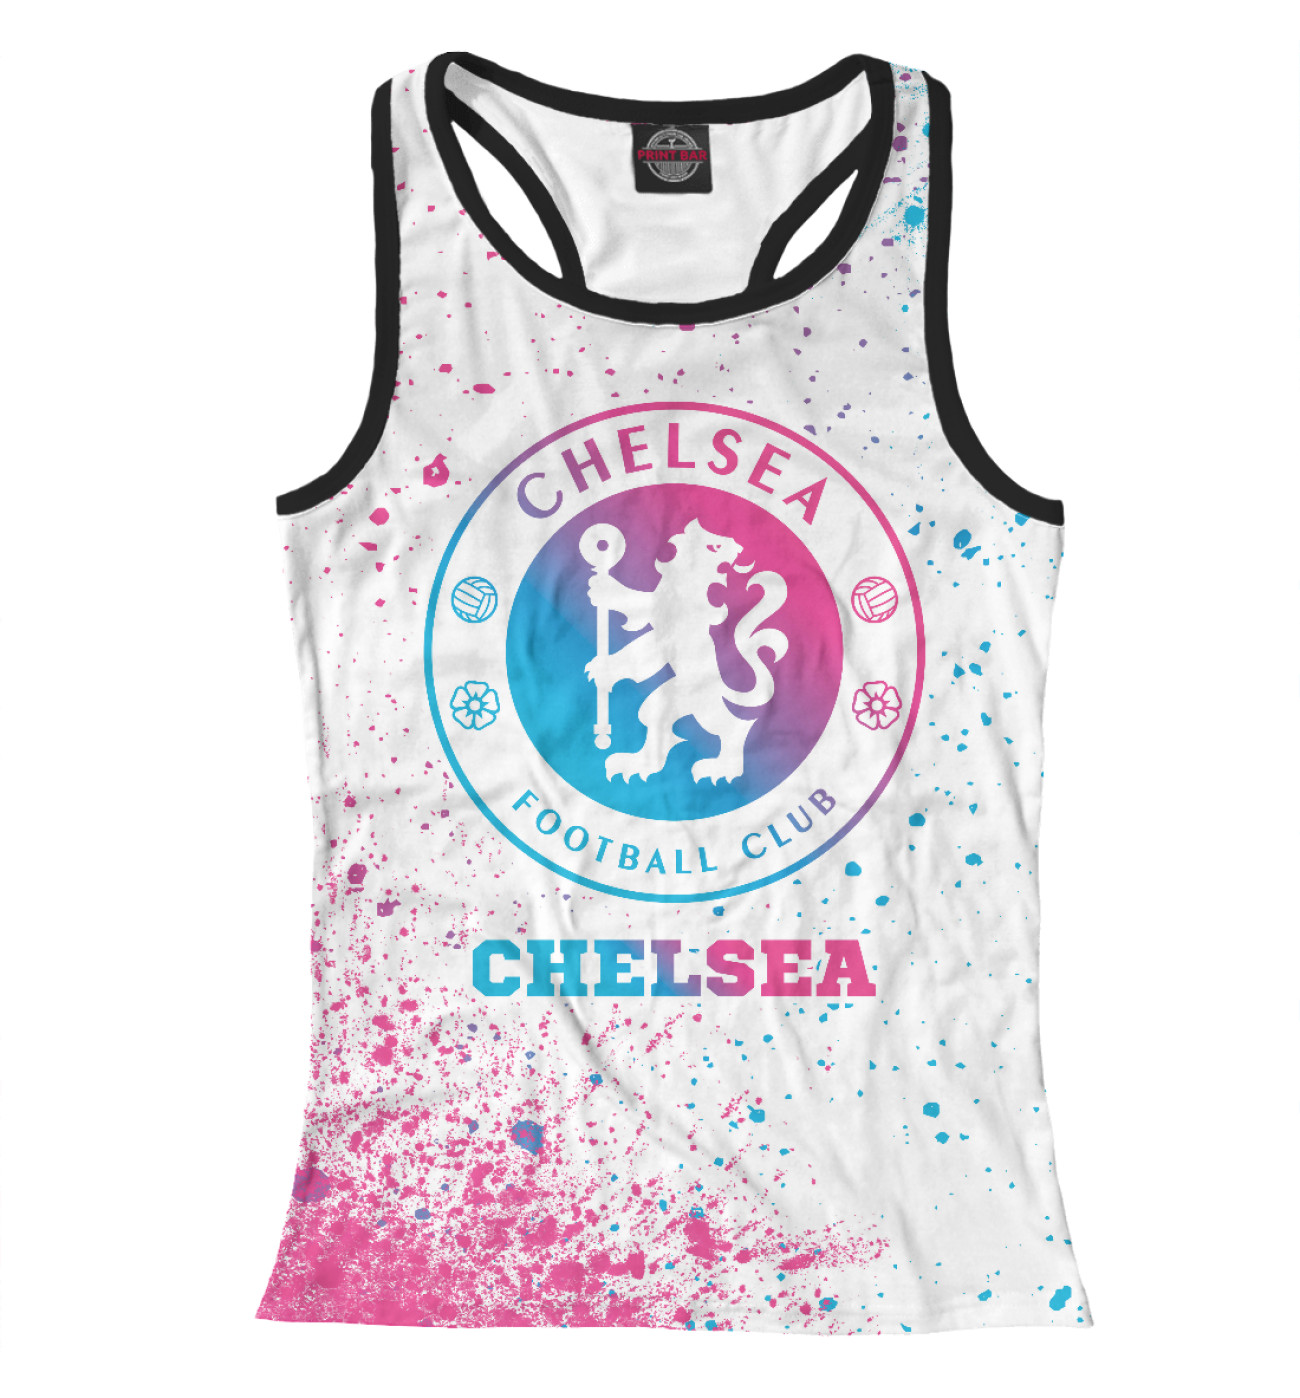 Женская Борцовка Chelsea Neon Gradient (цветные брызги), артикул: CHL-323541-mayb-1